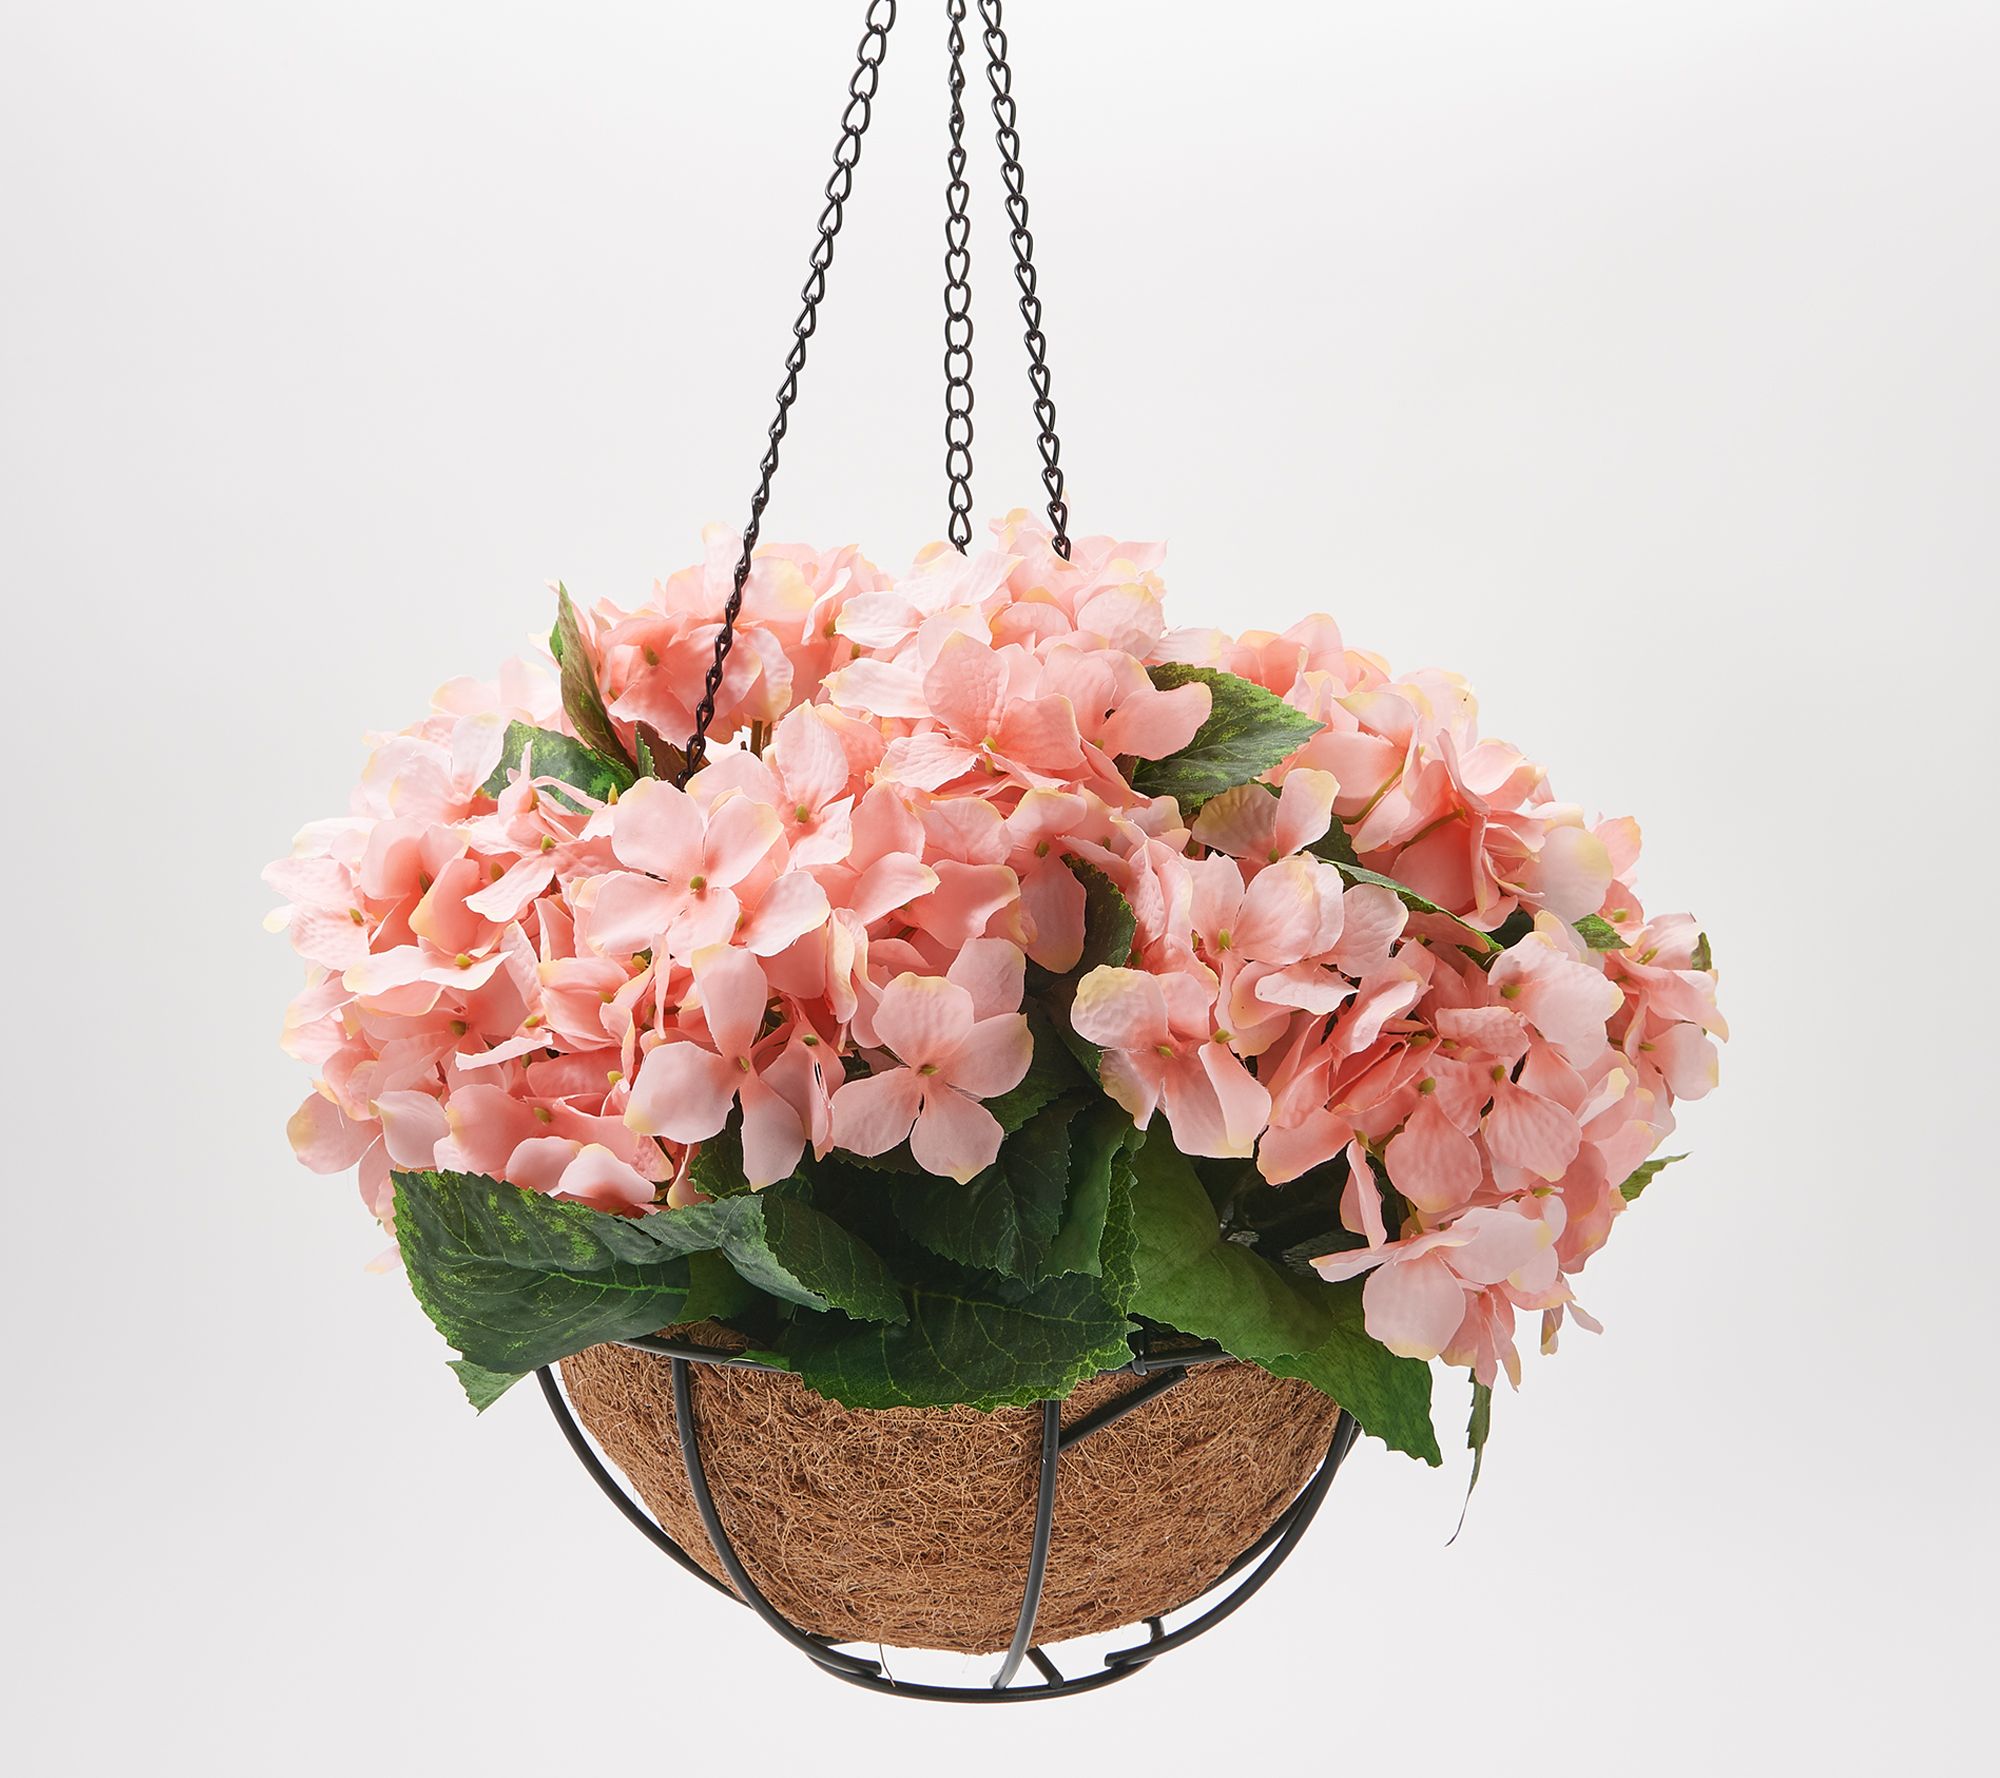 Home Furniture Diy Artificial Hydrangea Hanging Basket Outdoor Decor Wicker Basket Faux Flowers Home Decor